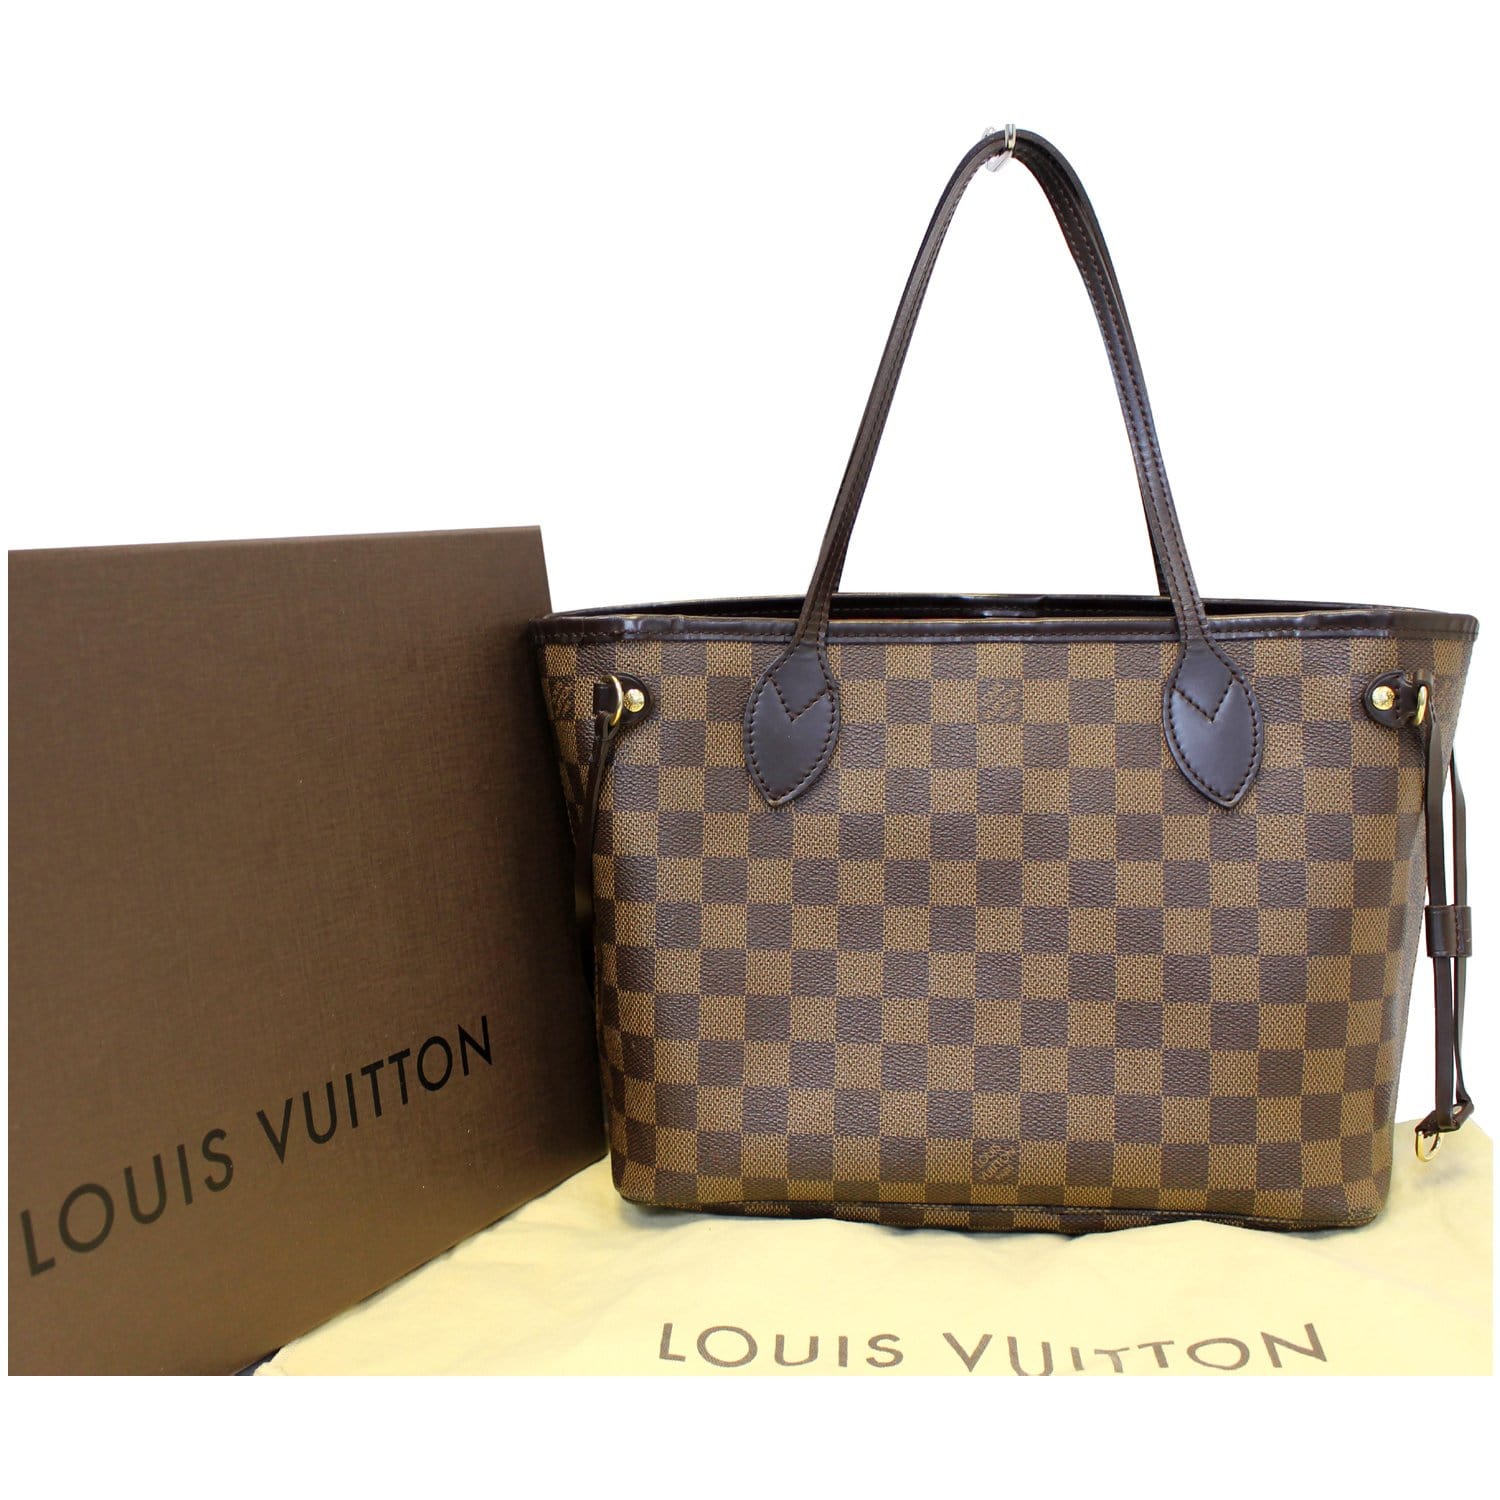 Louis Vuitton Small Damier Ebene Neverfull PM Tote Bag 41lk68